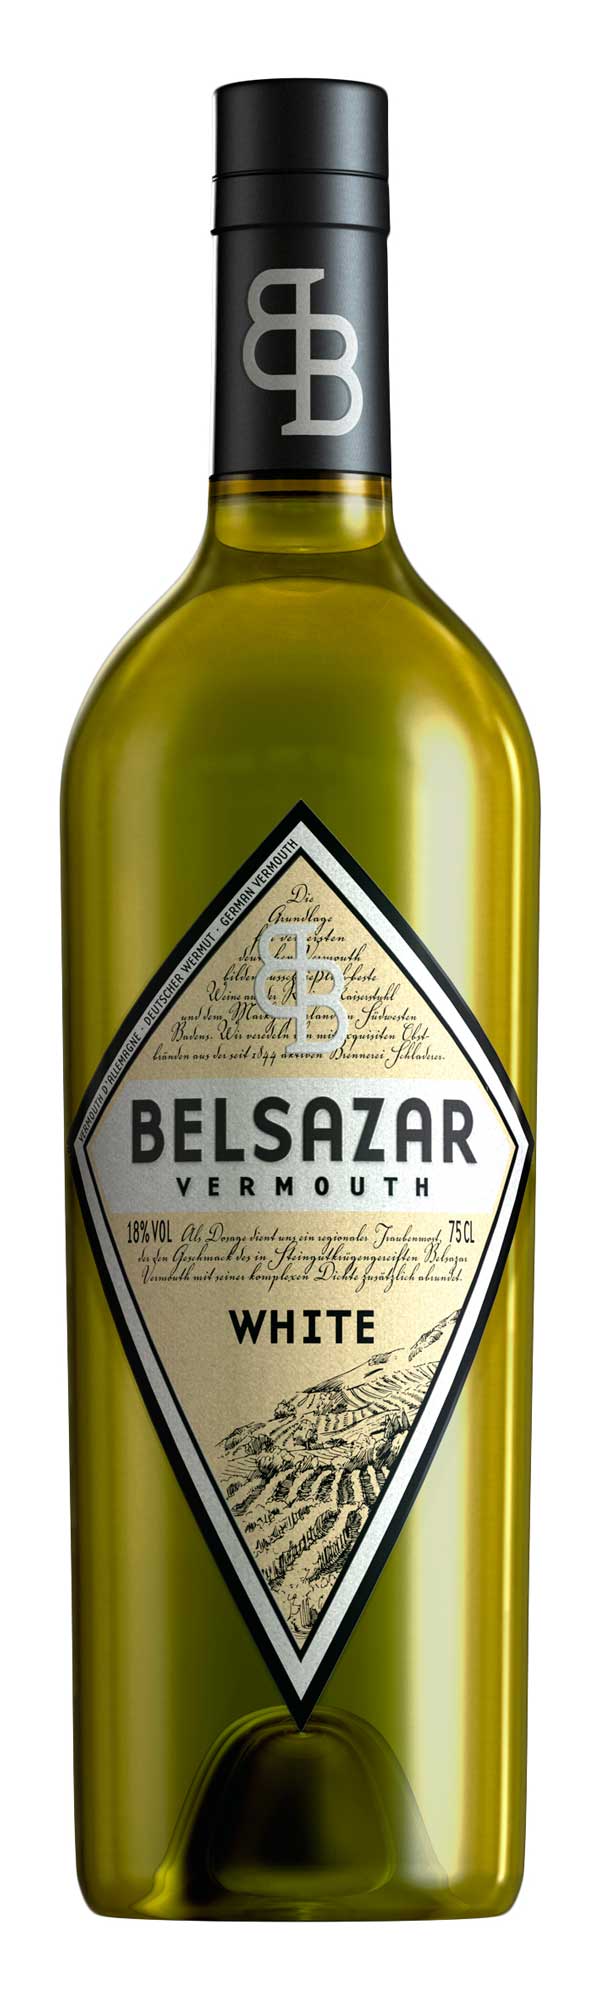 Belsazar Vermouth White, 75cl, 18% alc. - Drinkshop